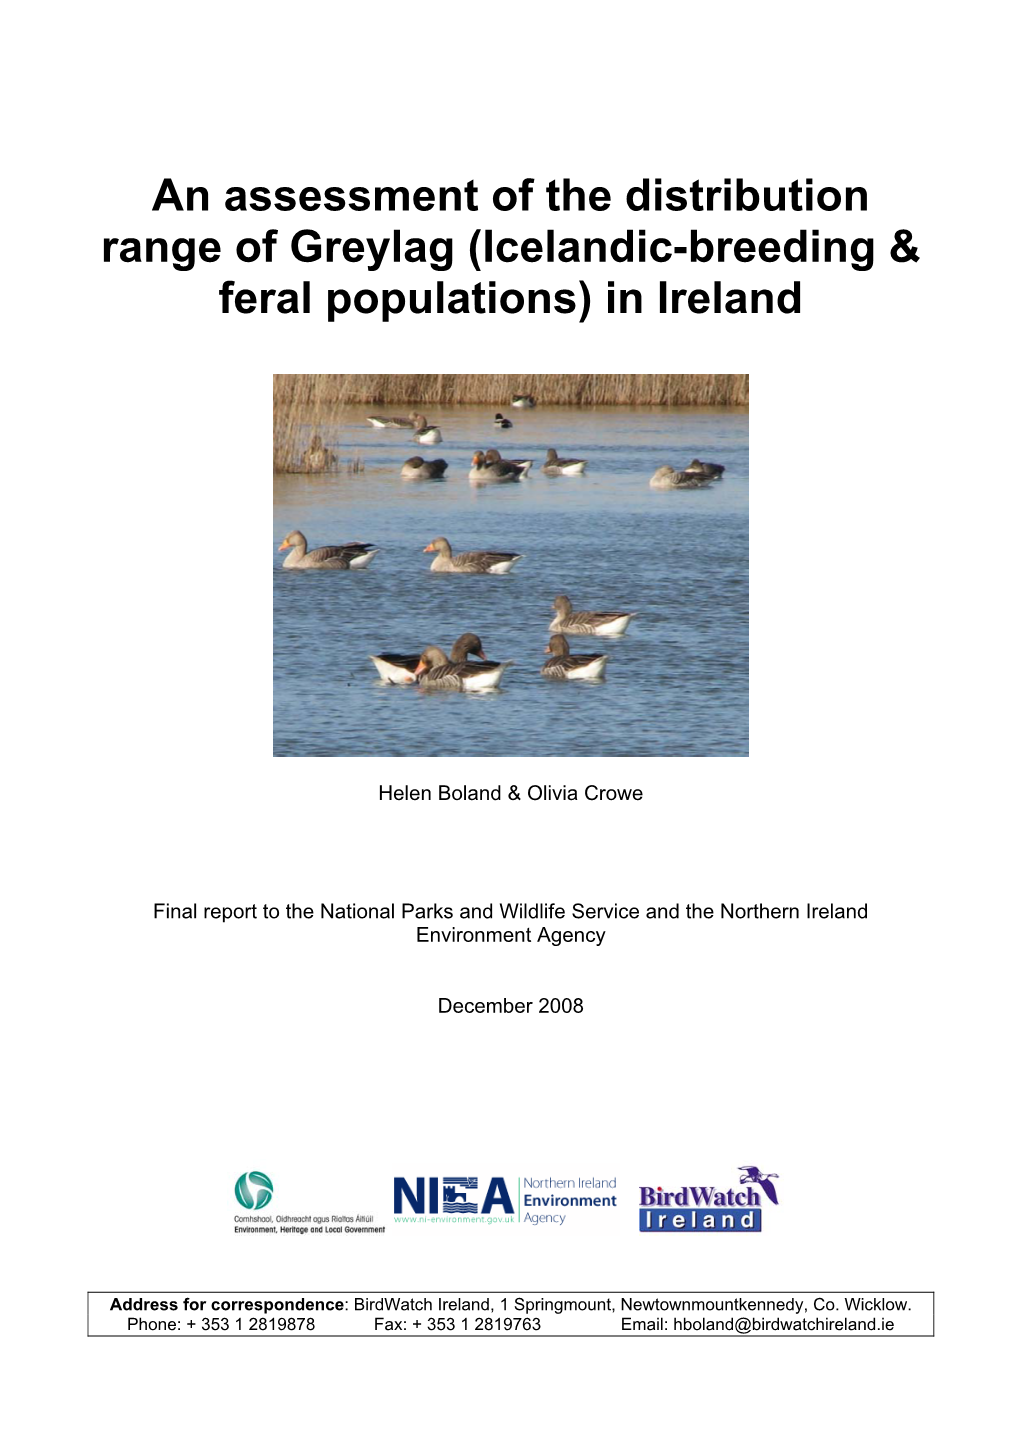 (Icelandic-Breeding & Feral Populations) in Ireland